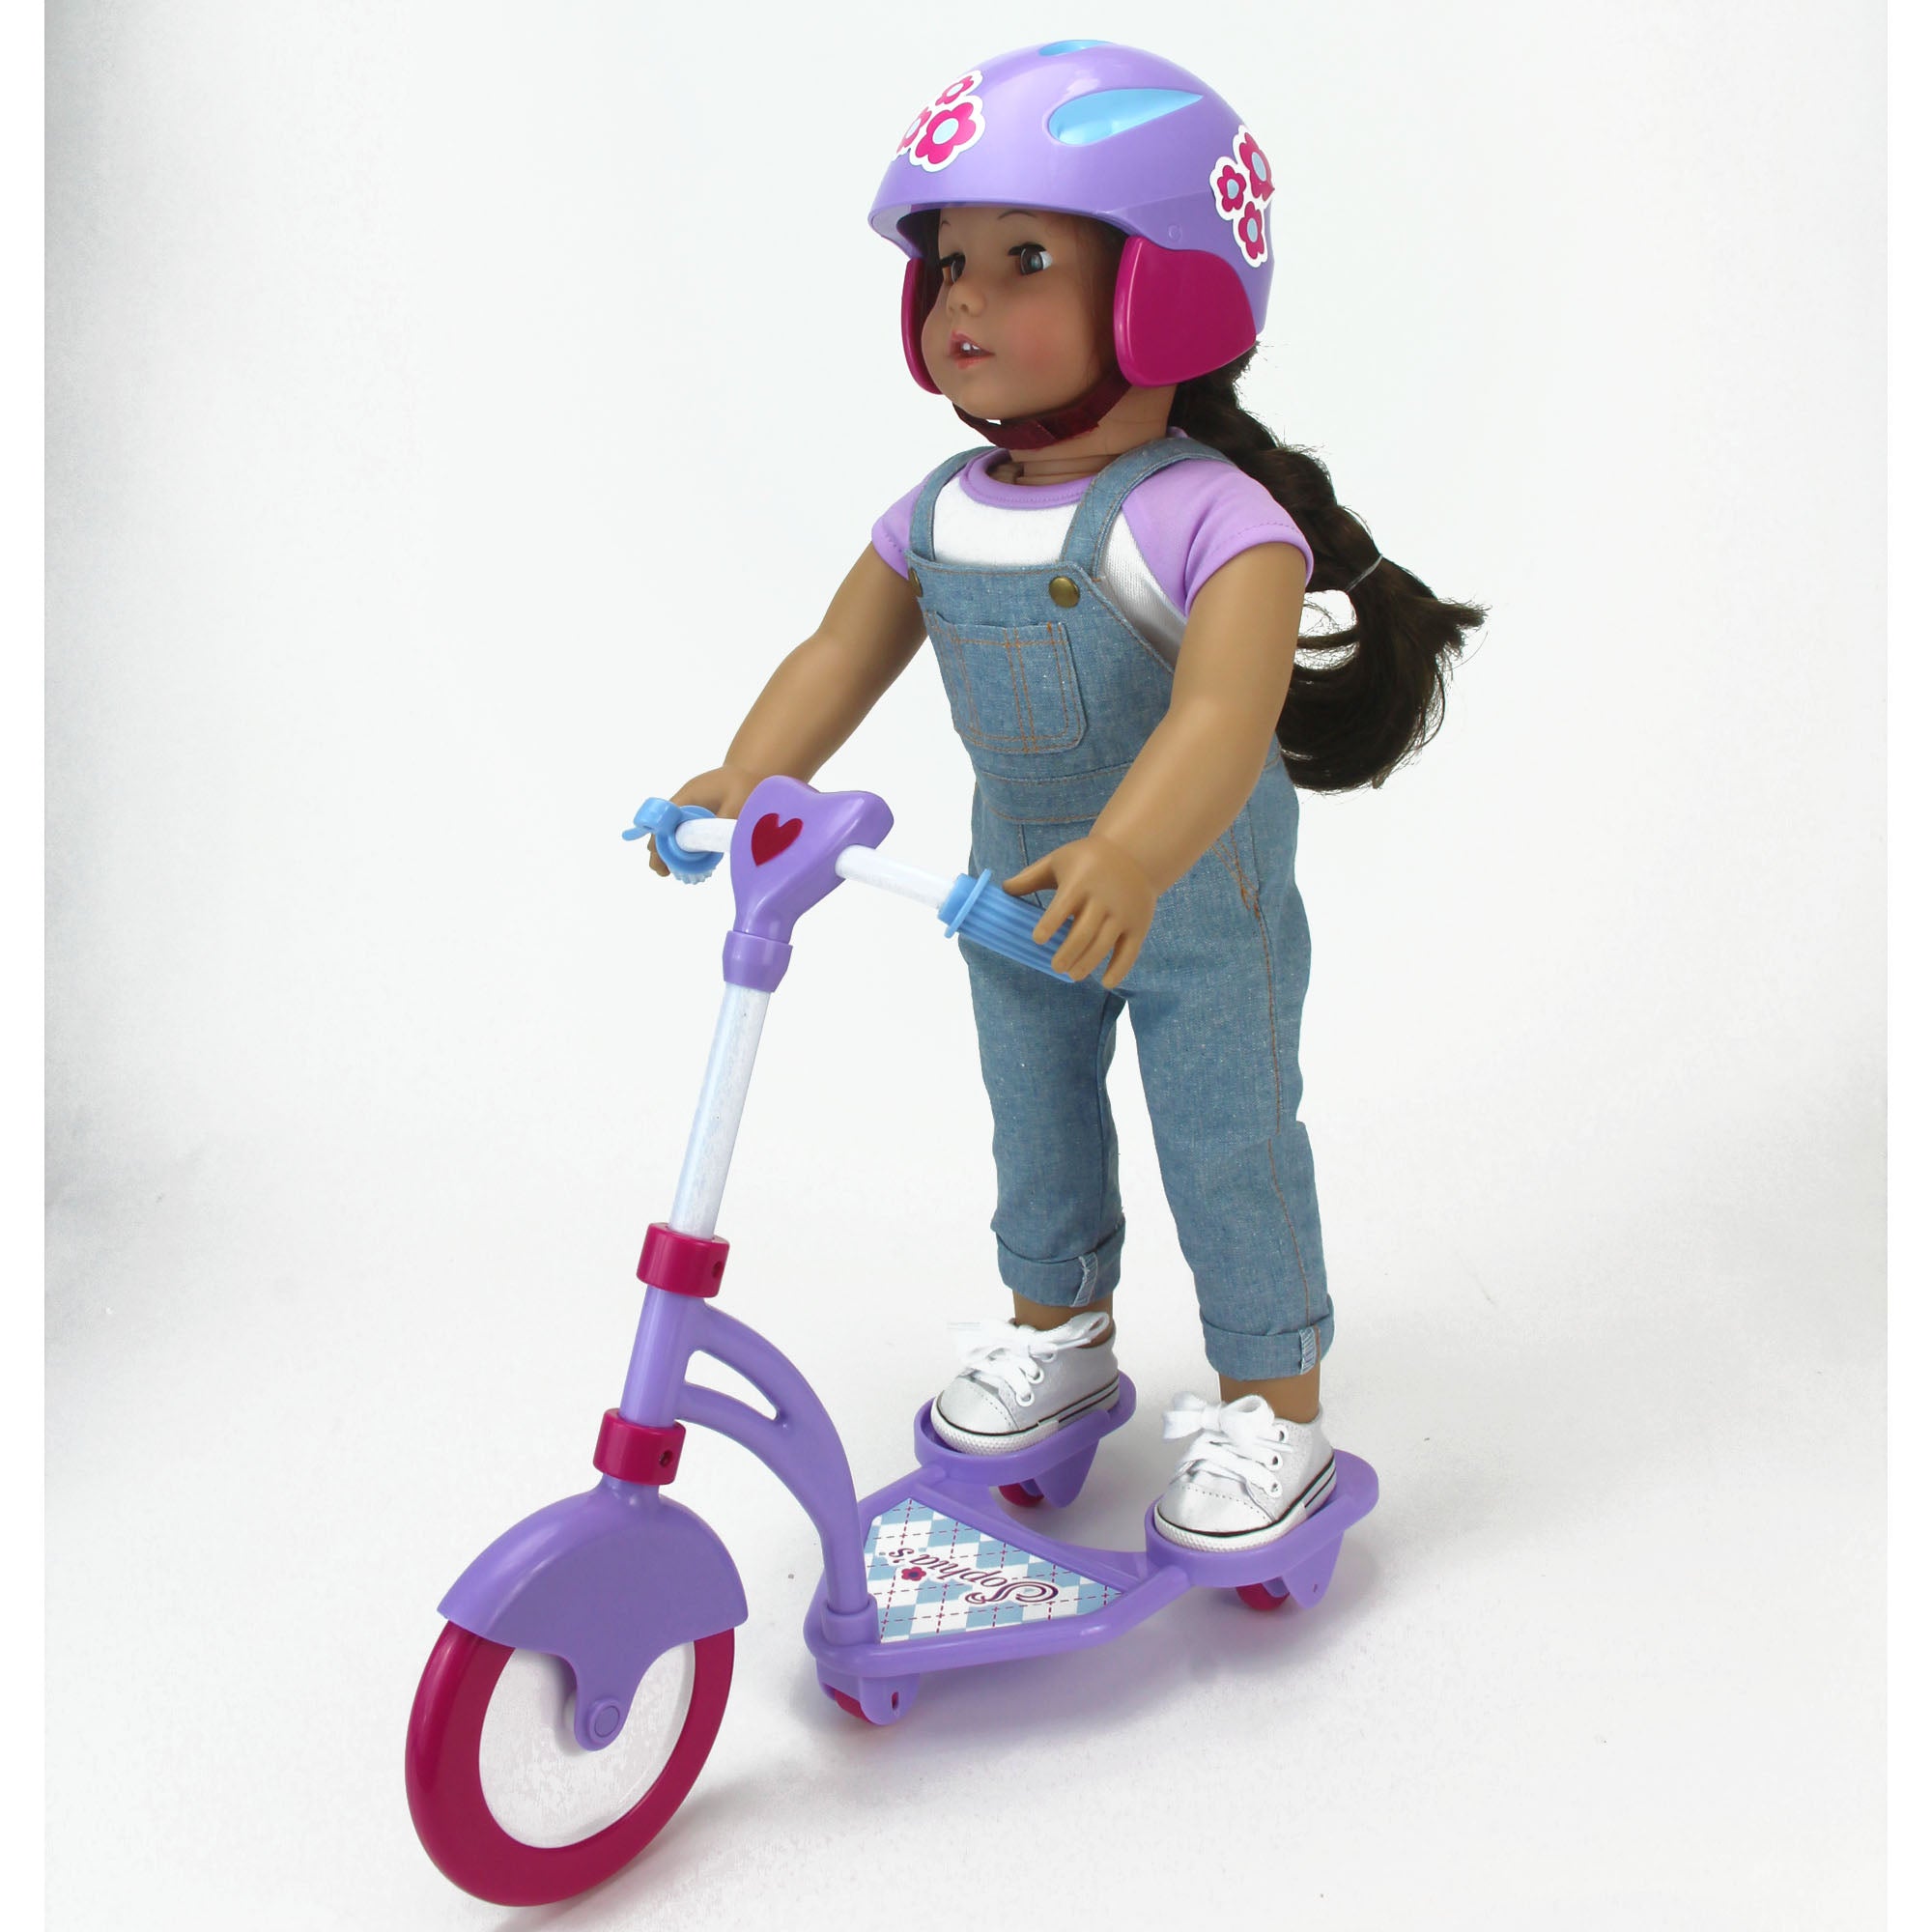 Sophia's - 18" Doll - Mini Scooter & Helmet Set - Blue, Lavender and Hot Pink